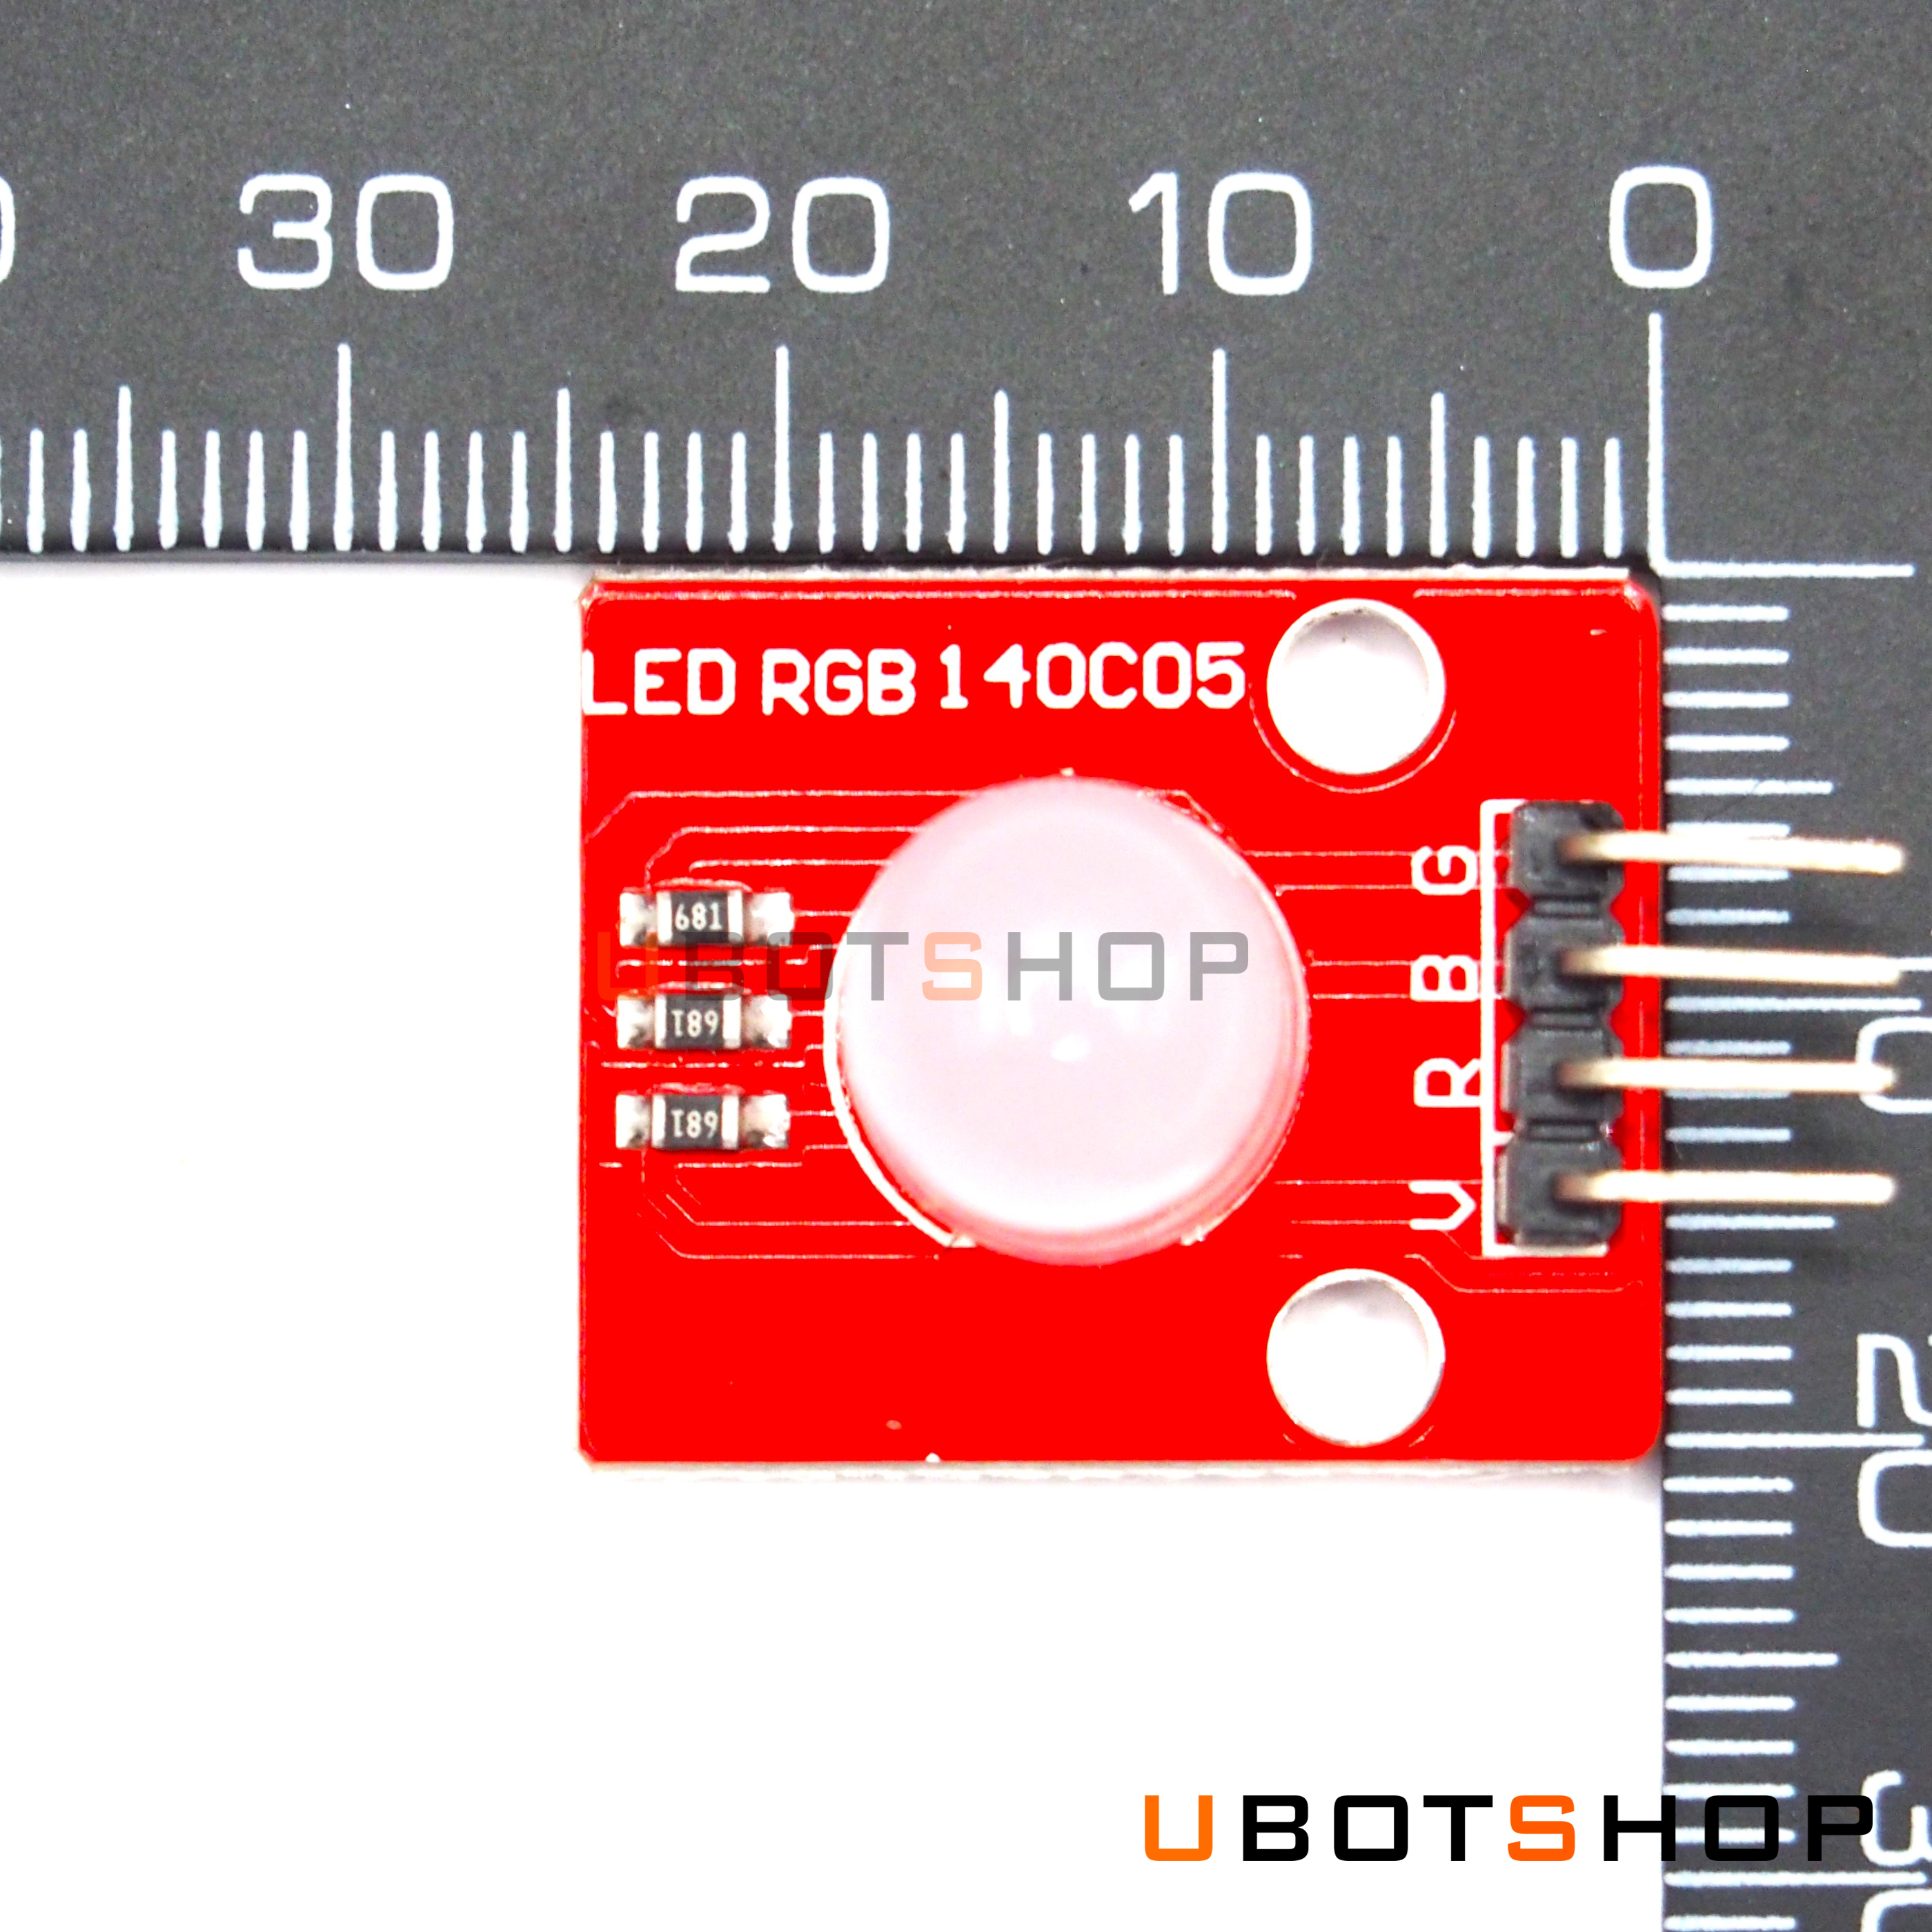 10MM RGB LED Module Light Emitting Diode (SL0001)